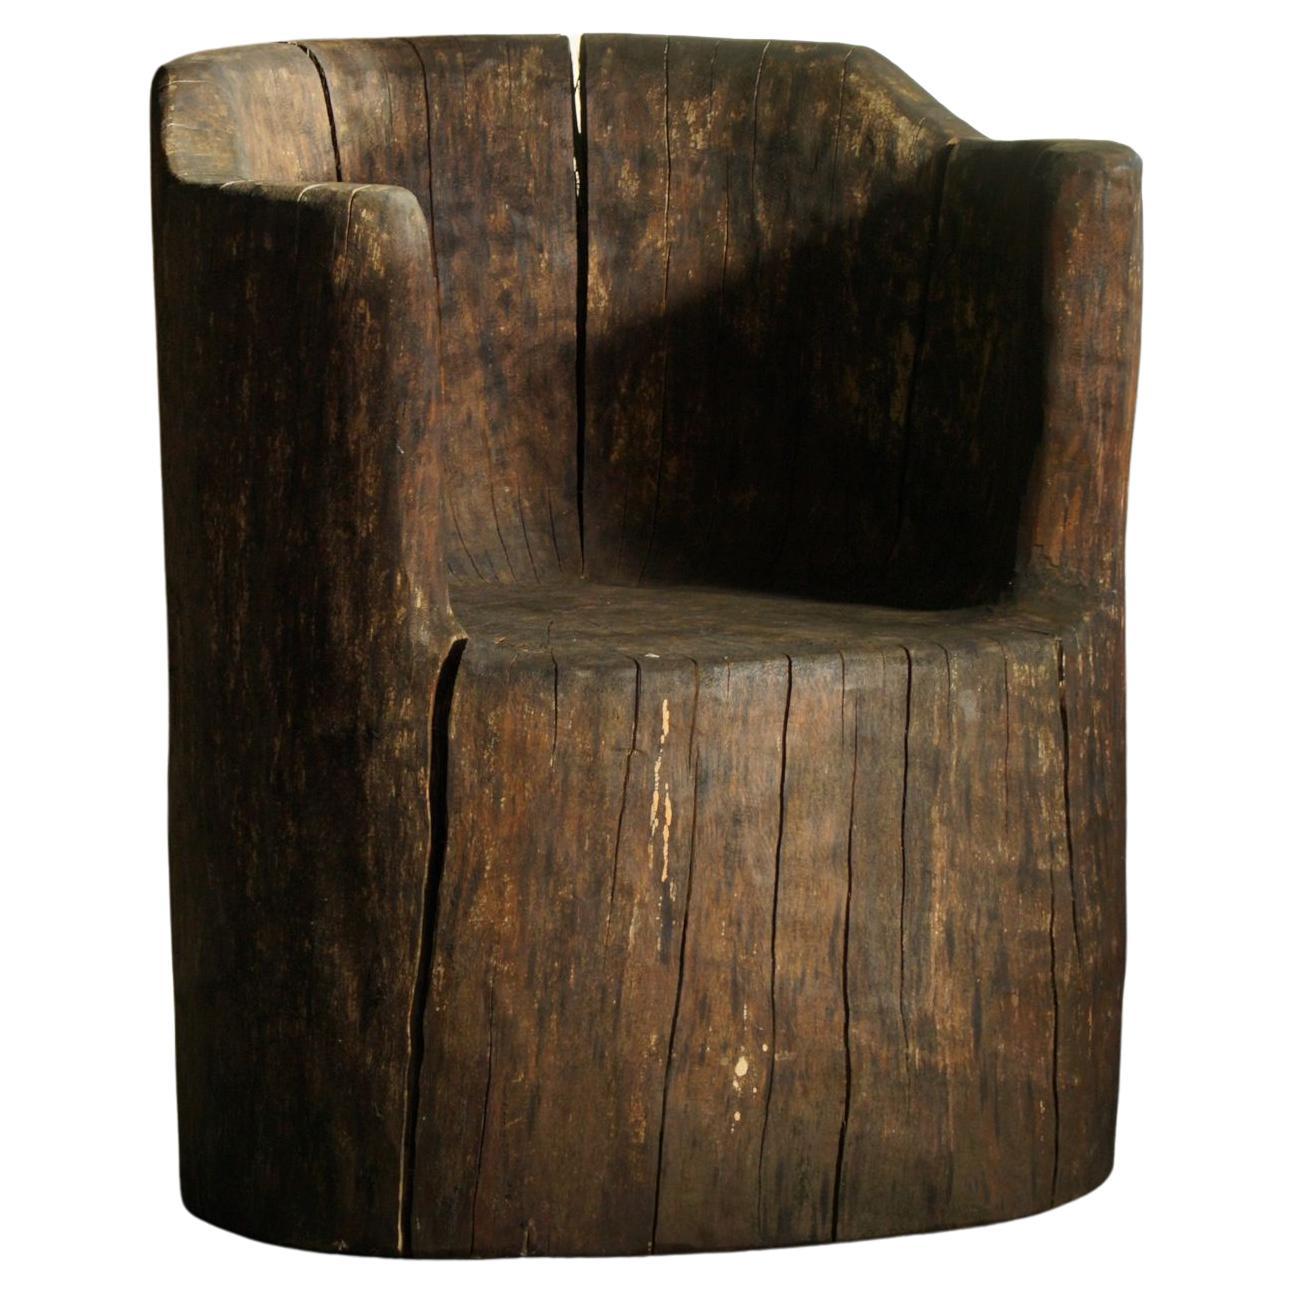 Antique Swedish Carved Primitive Wabi Sabi Brutalist Stump Chair, Early 20th C